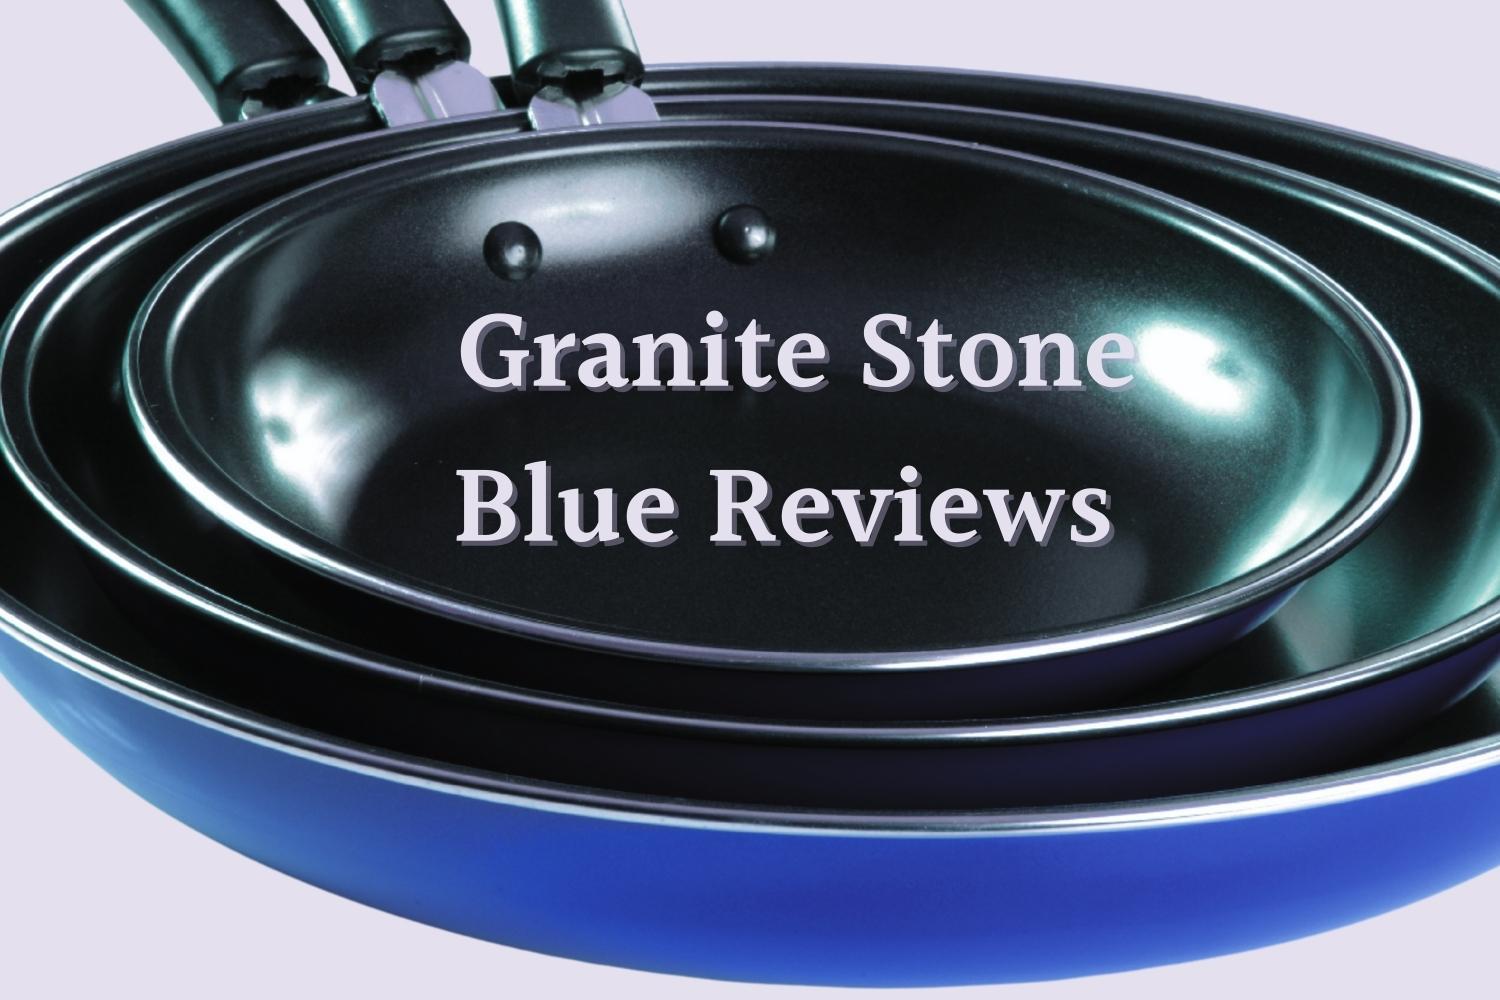 https://clankitchen.com/wp-content/uploads/2022/04/granite-stone-blue-2.jpg